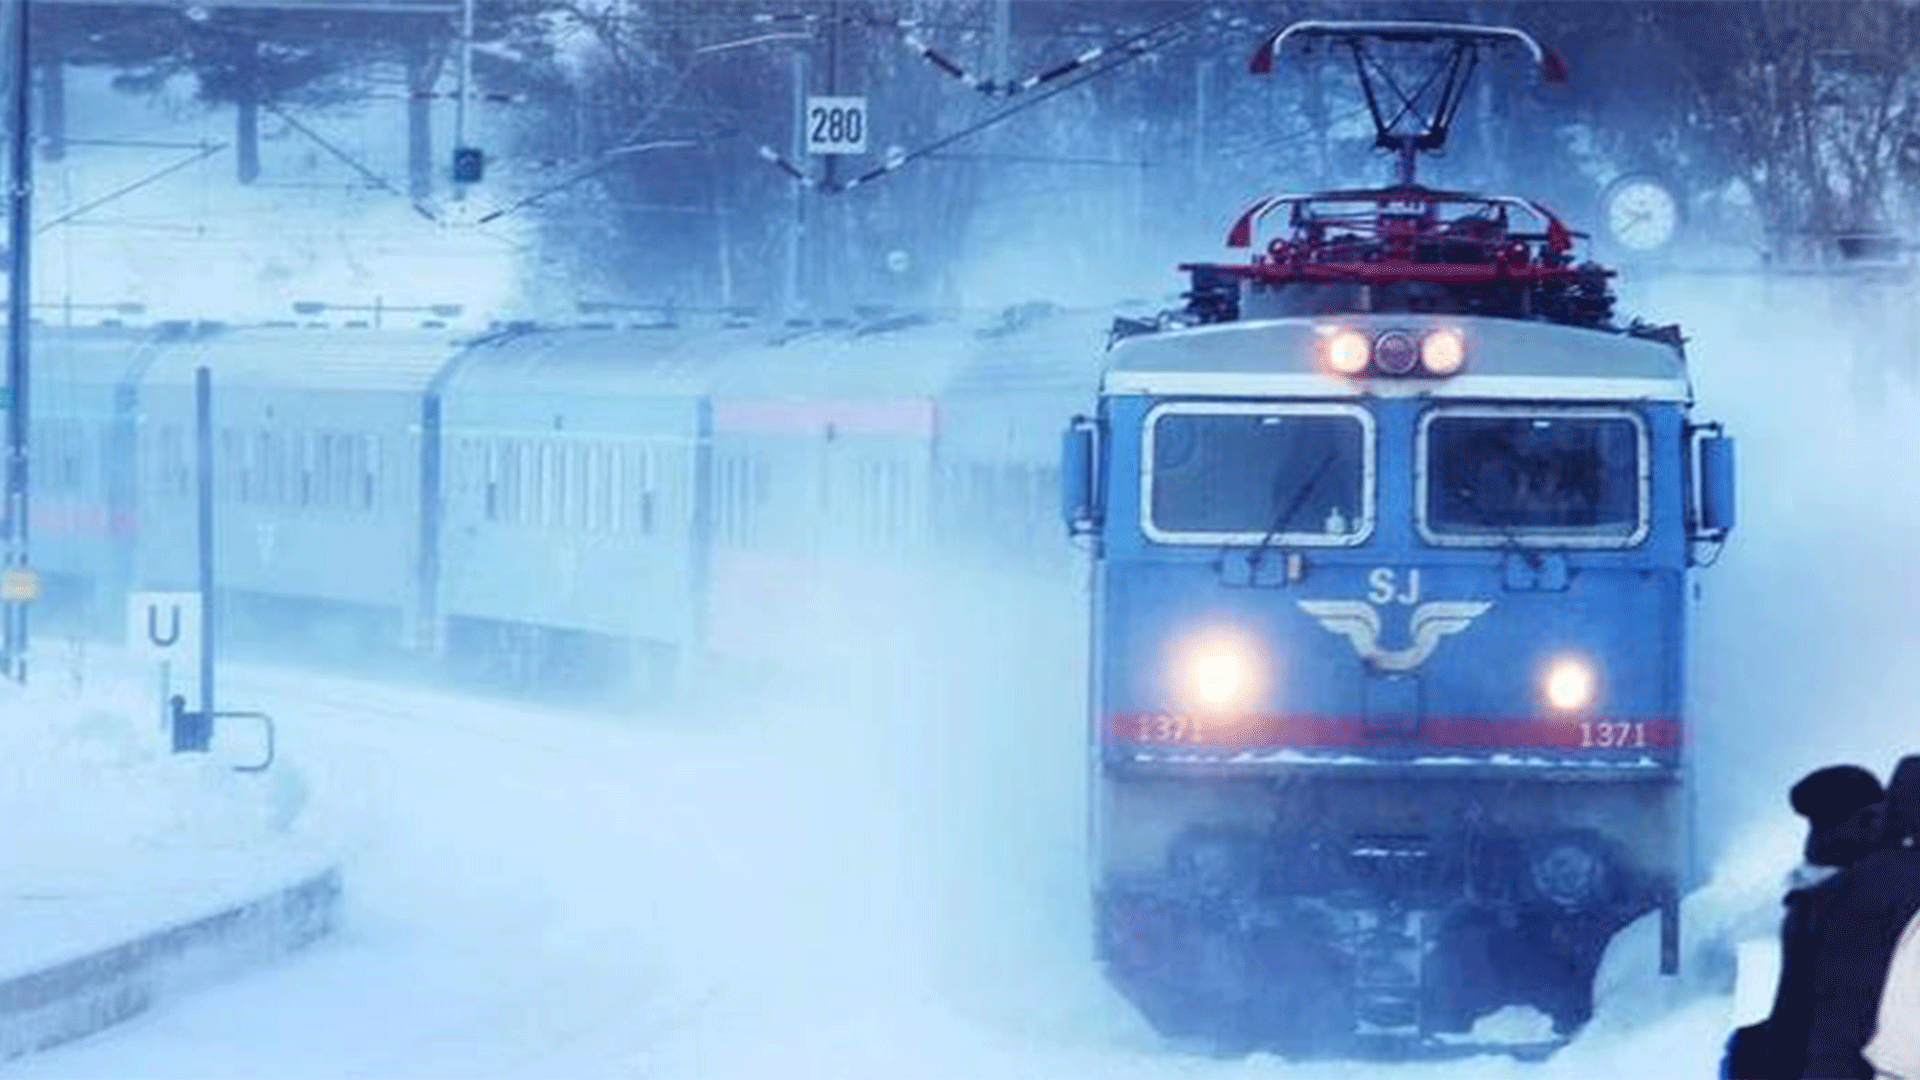 sj-night-train-in-the-winter